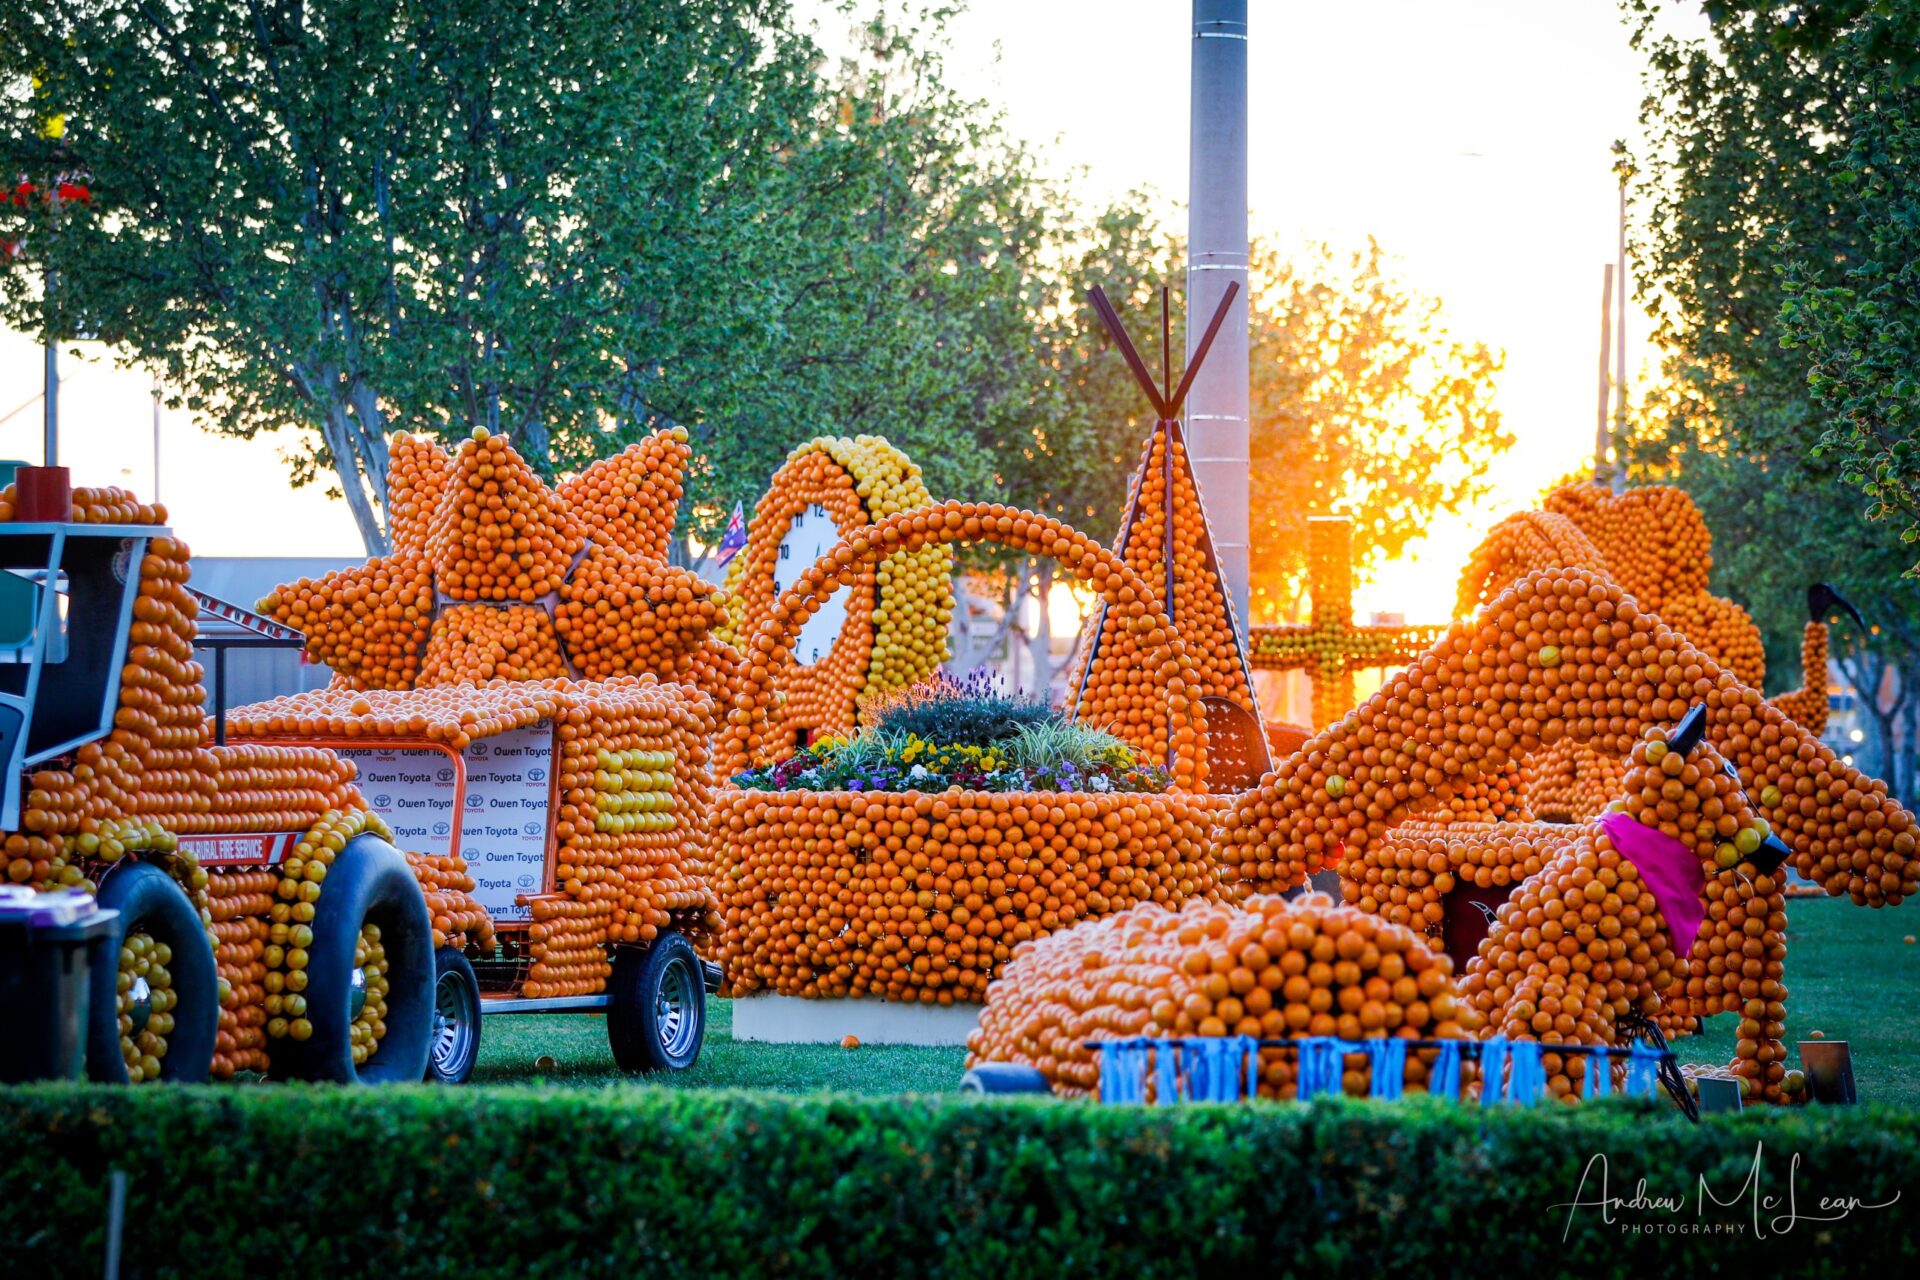 sculptures made of oranges